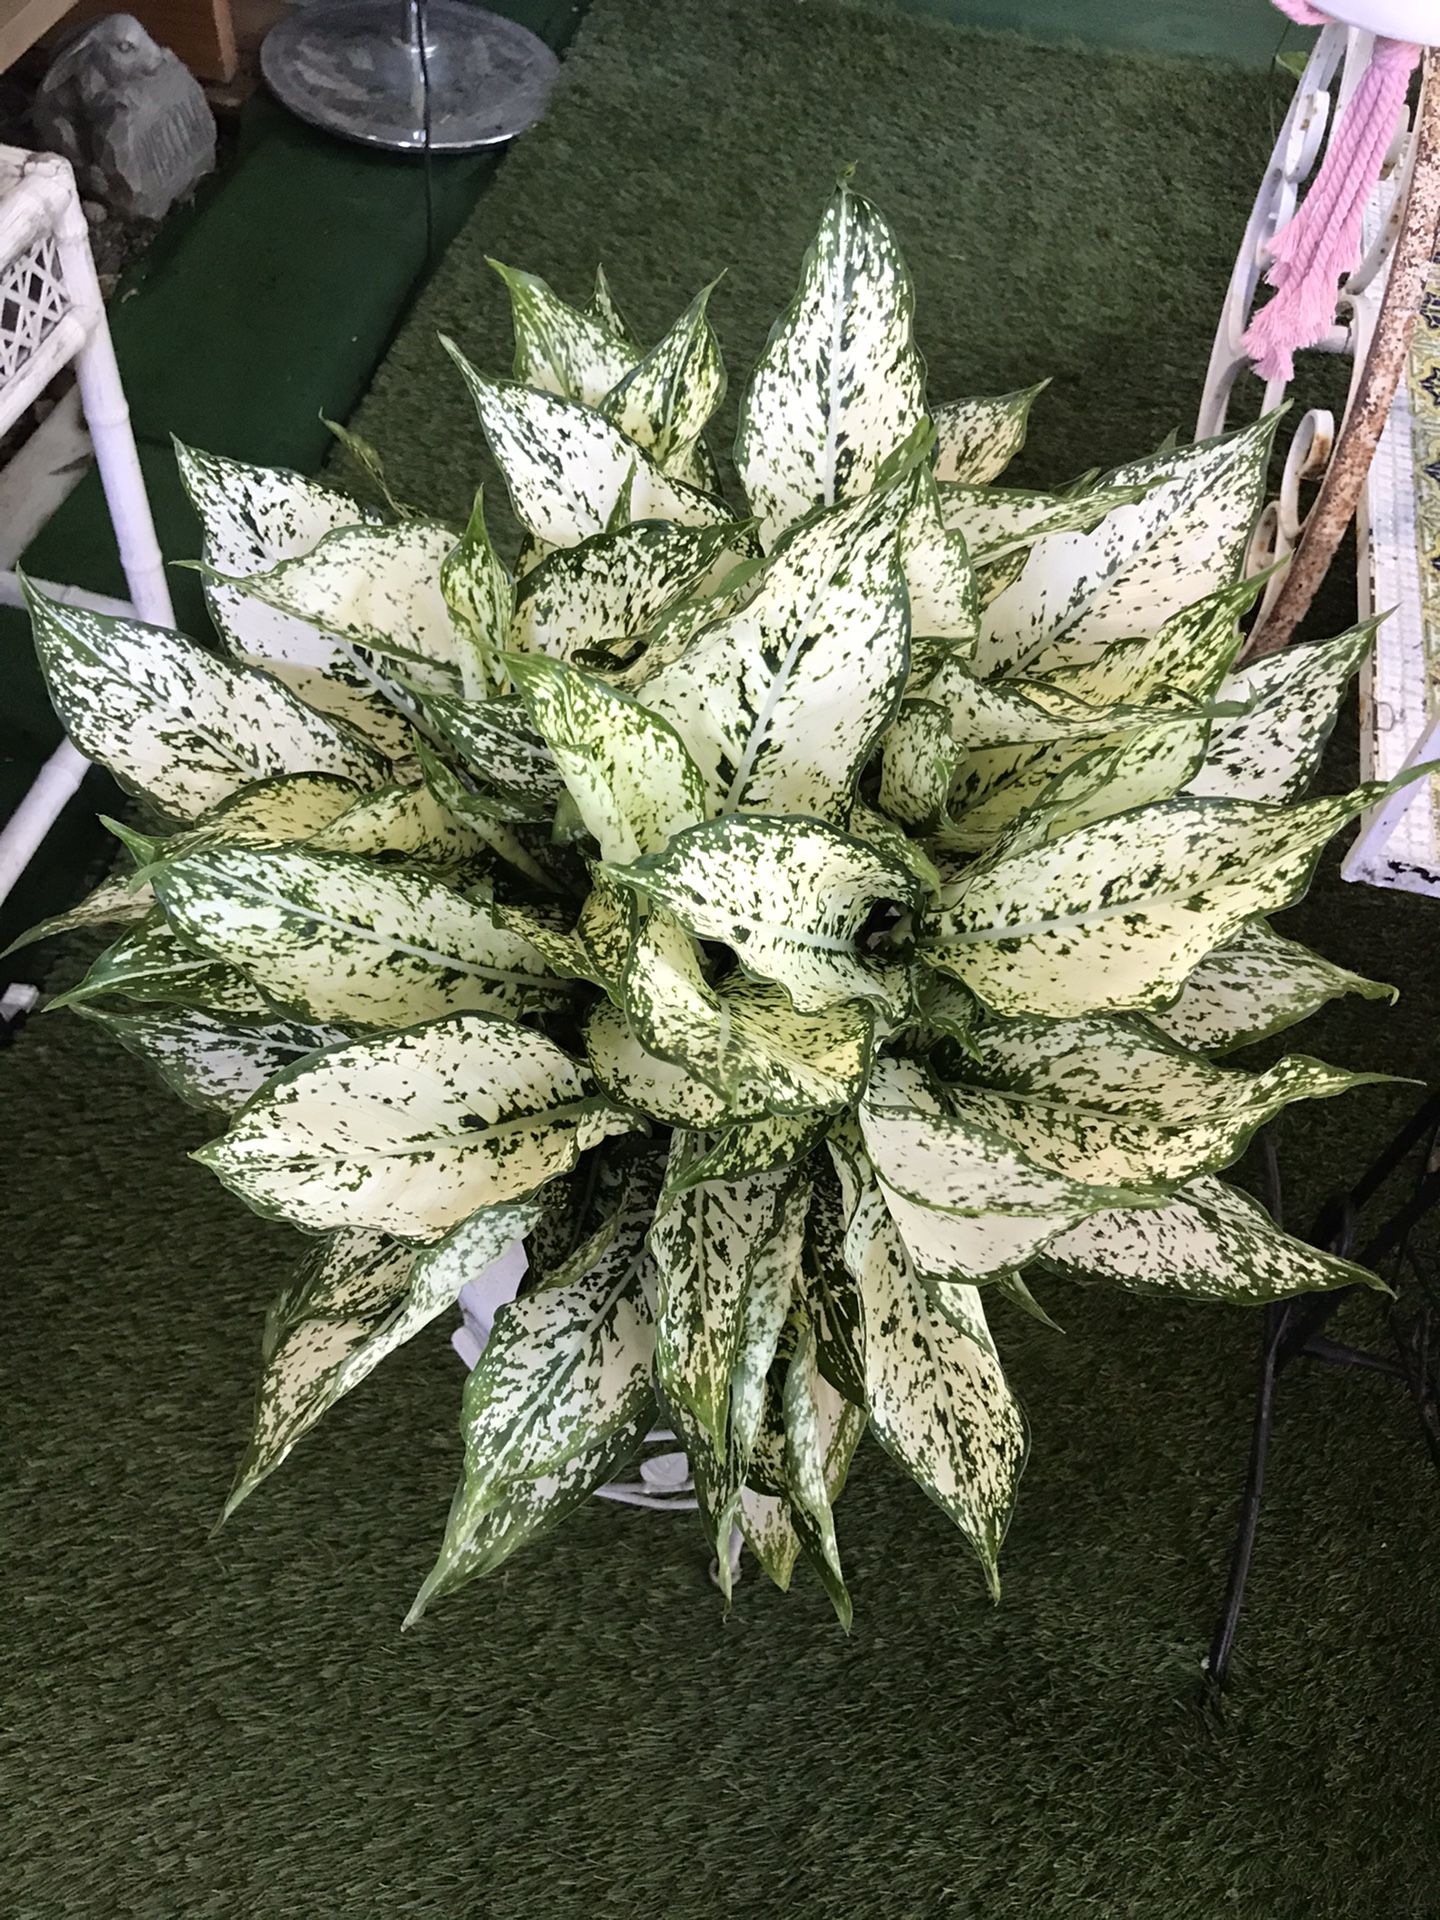 Plants (8”pot First Diamond Plant $35)